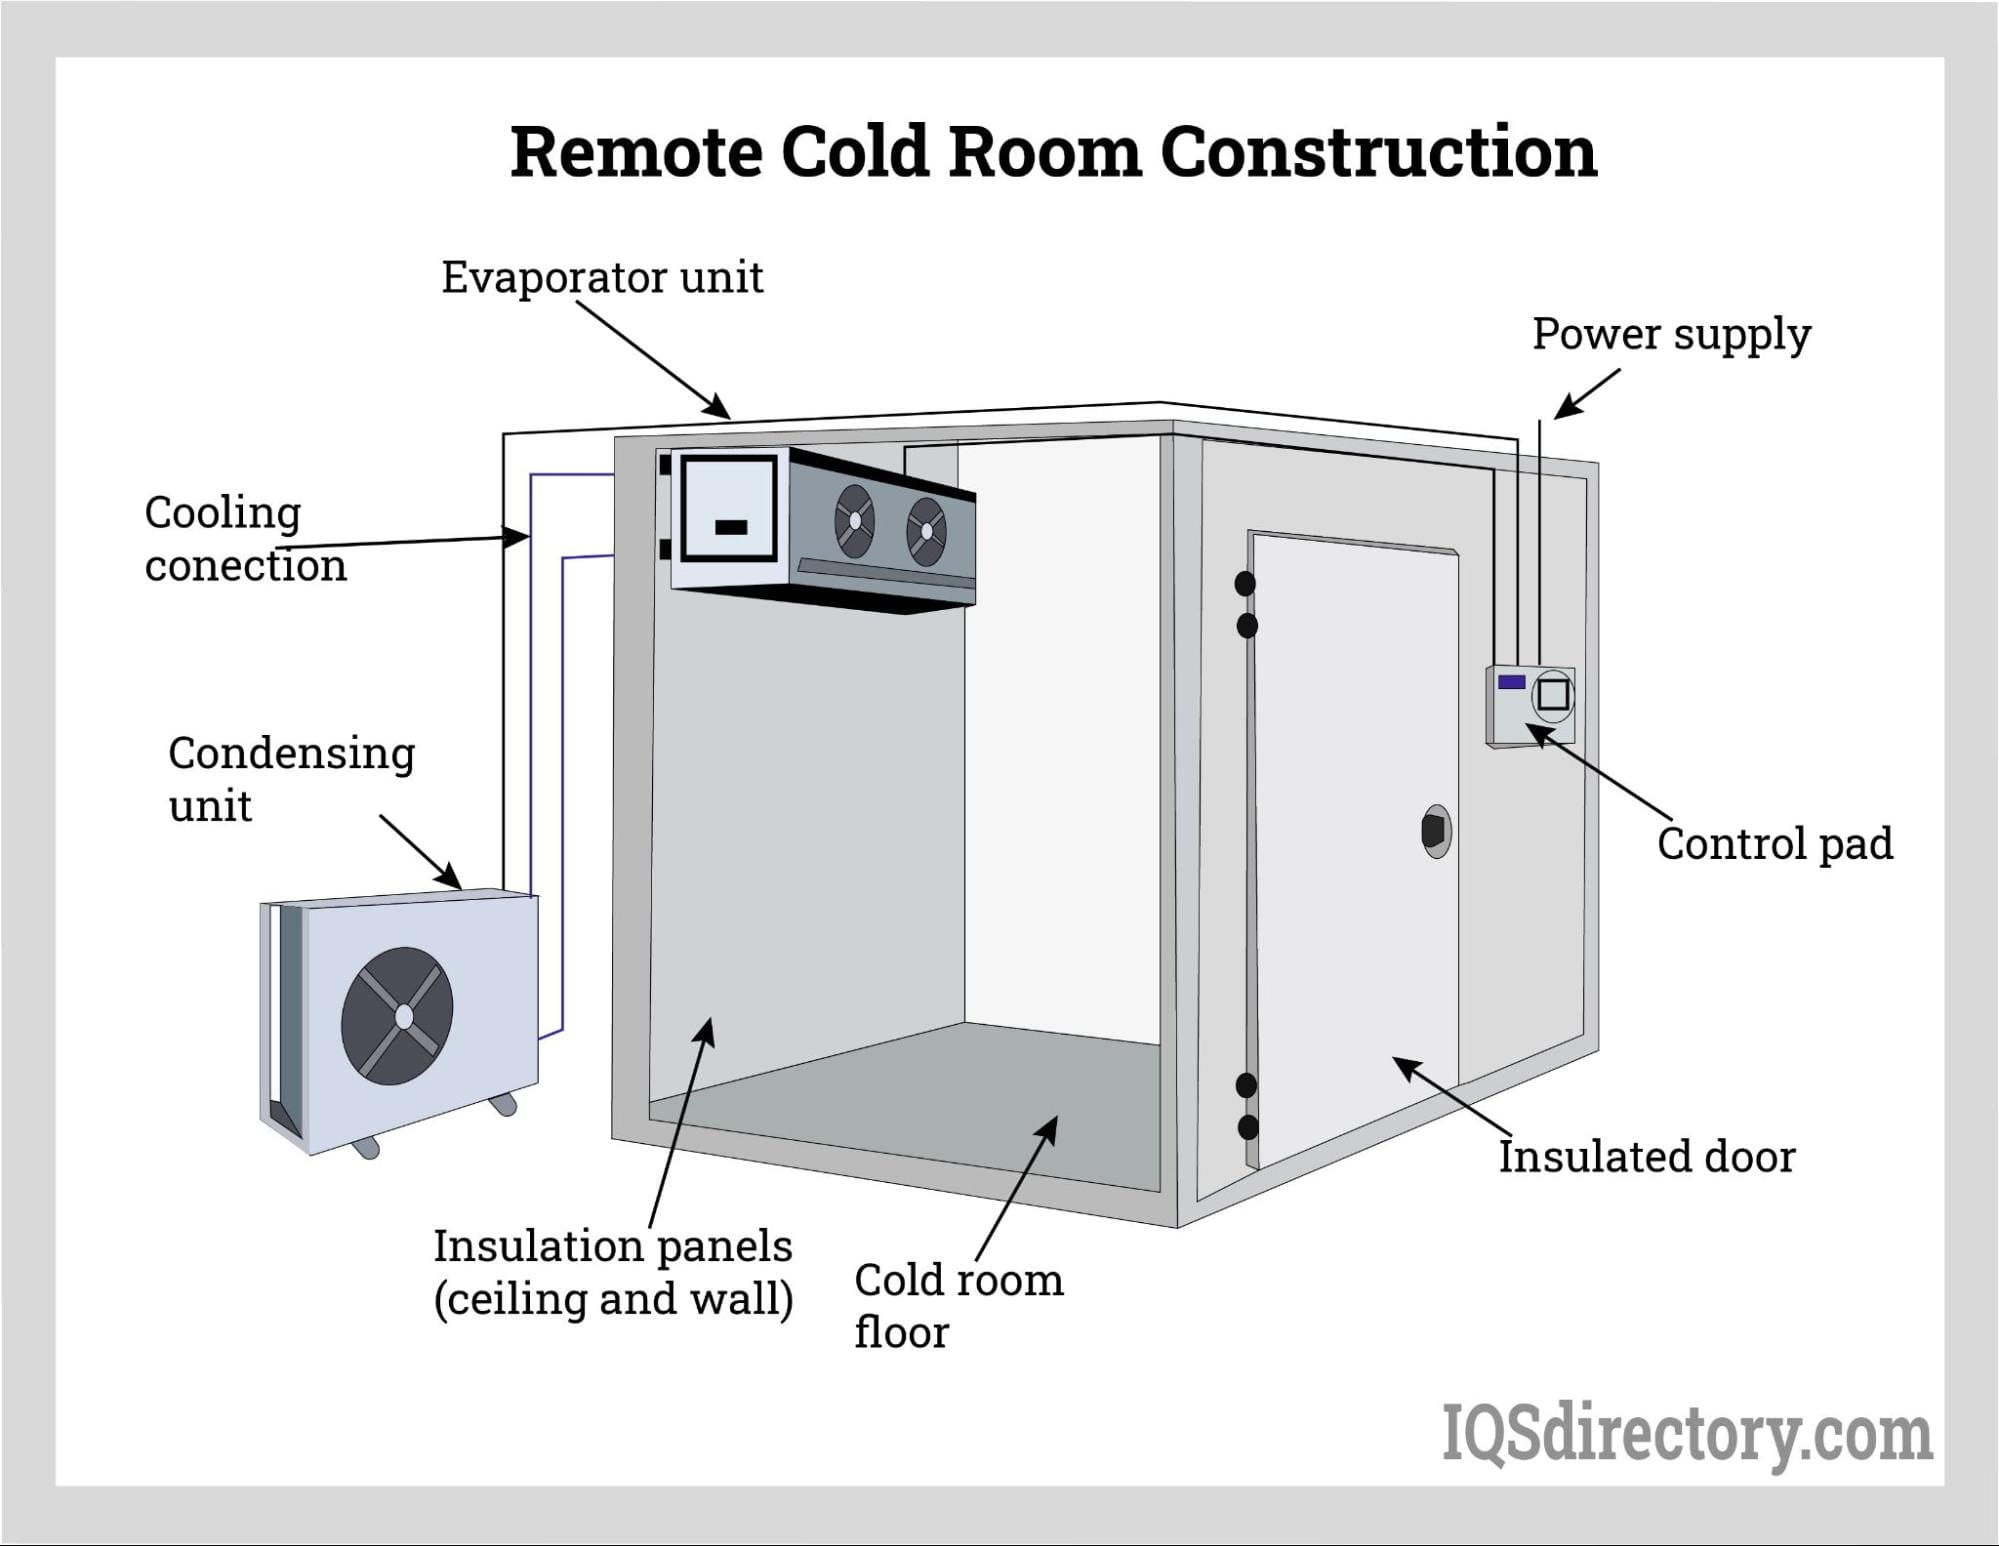 Remote Cold Room Construction